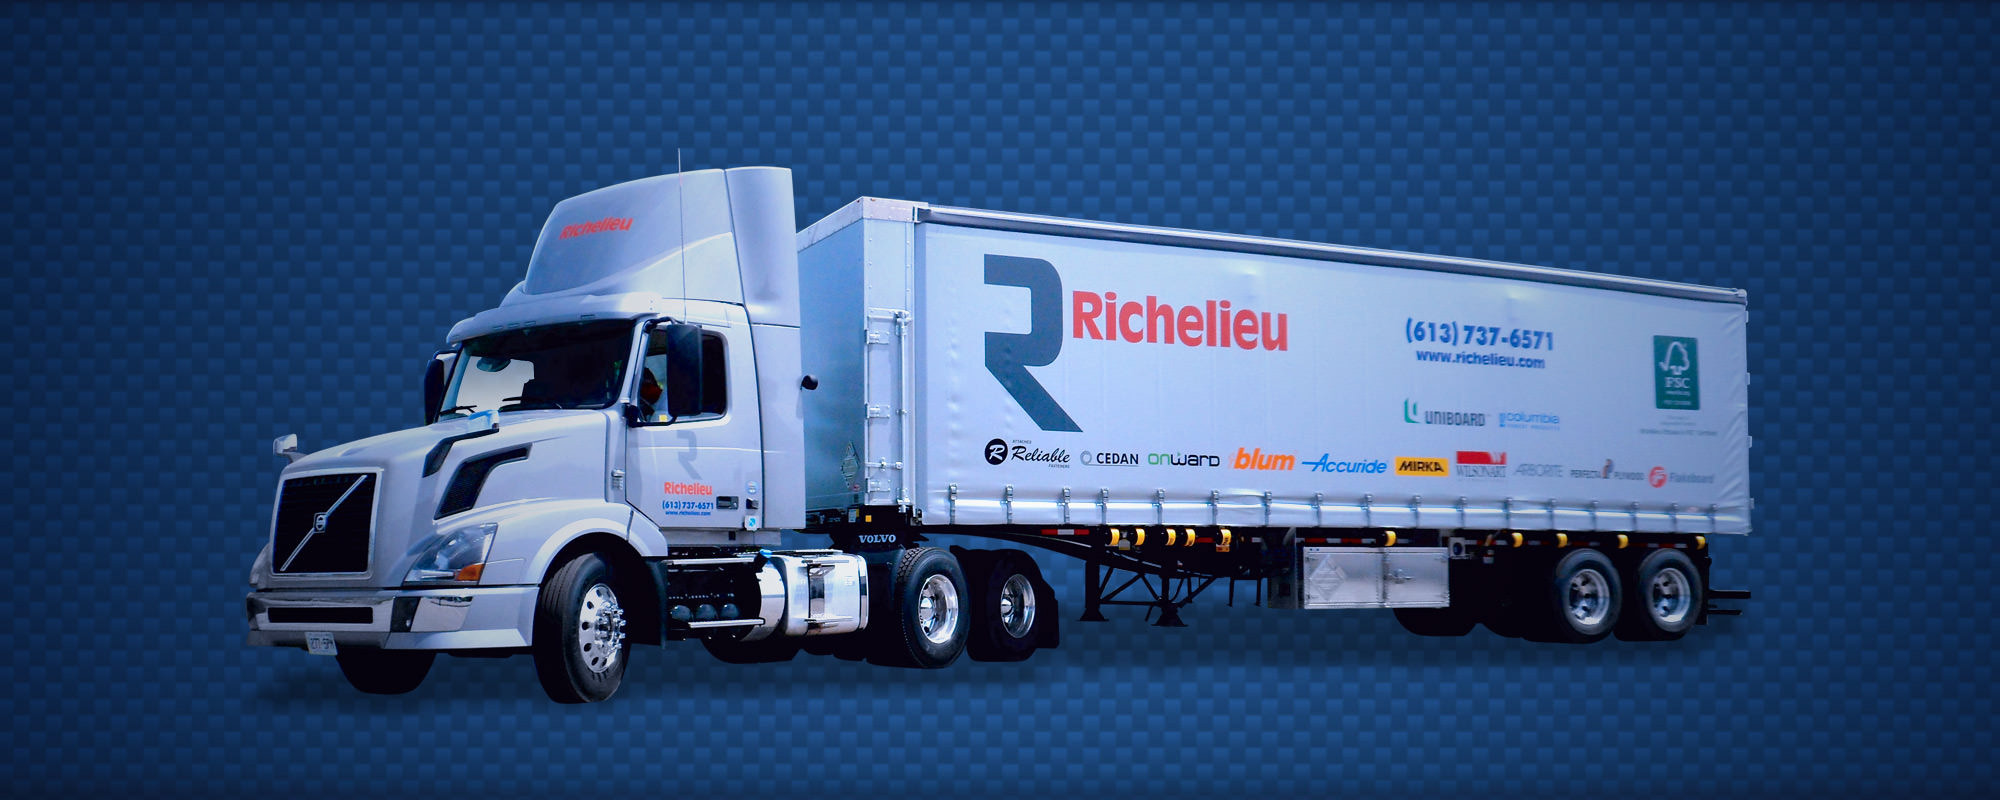 Richelieu semi truck on a dark blue background